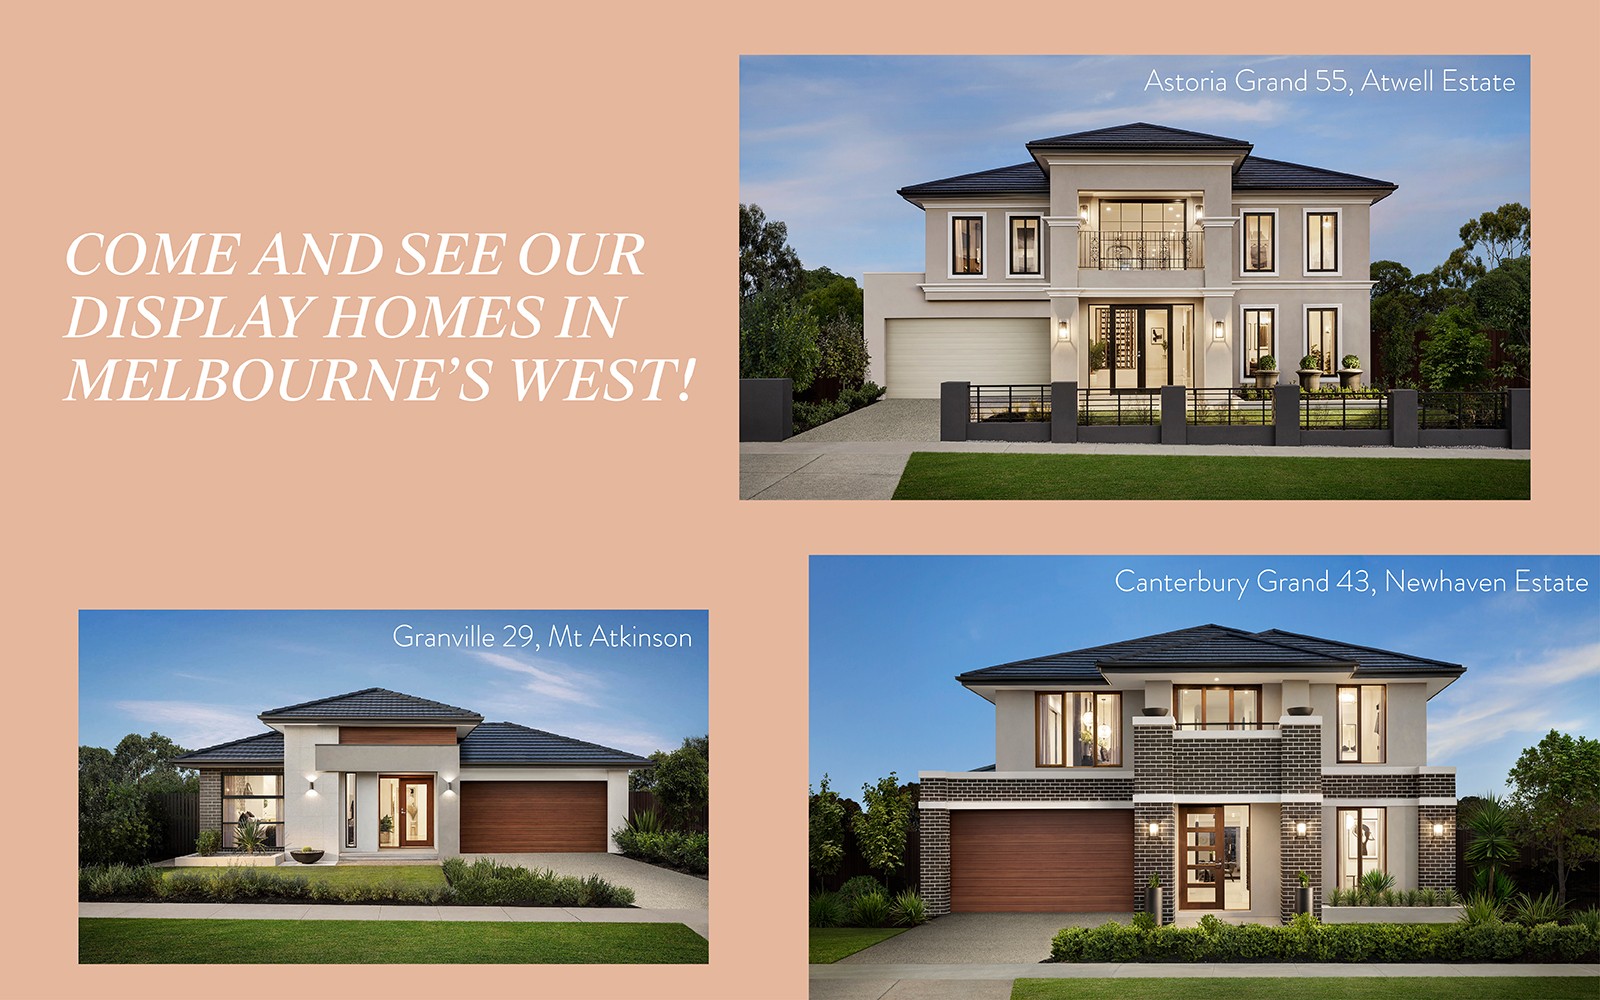 Want-the-Best-Think-Melbournes-West-carlisle-homes-graphic1-v3__Resampled.jpg